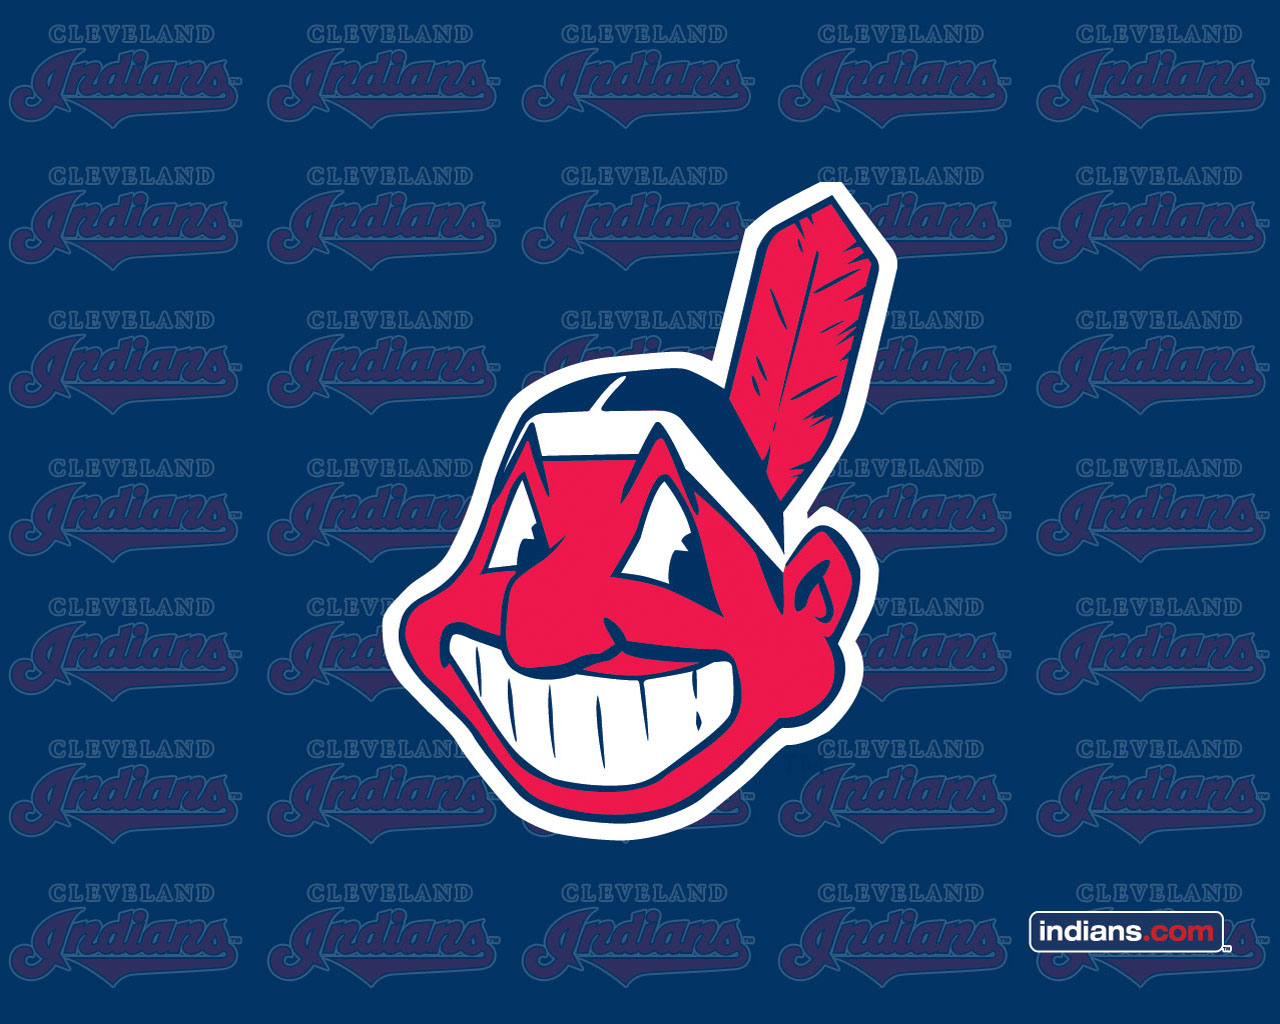 Washington Nationals Baseball Blog: Cleveland Indians - 2013 Preview